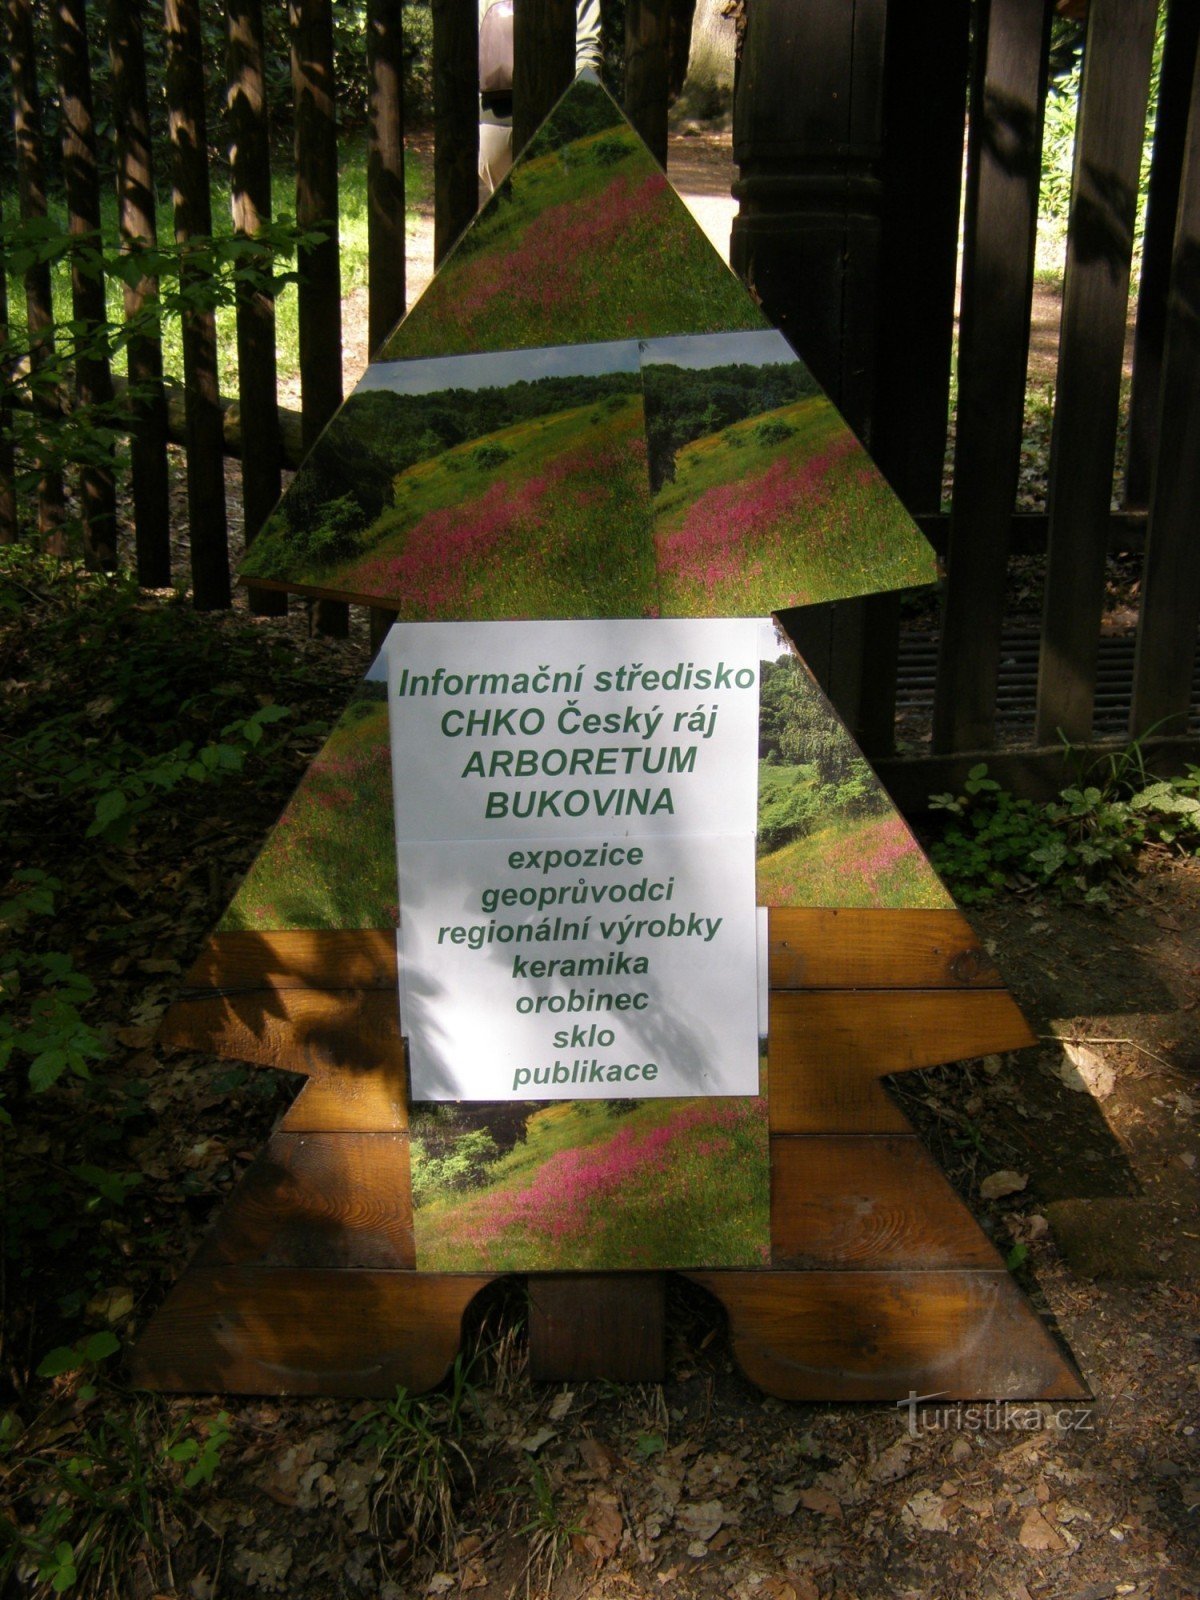 Bukovina Arboretum - Bohemian Paradise PLA:n kausiluonteinen tietokeskus